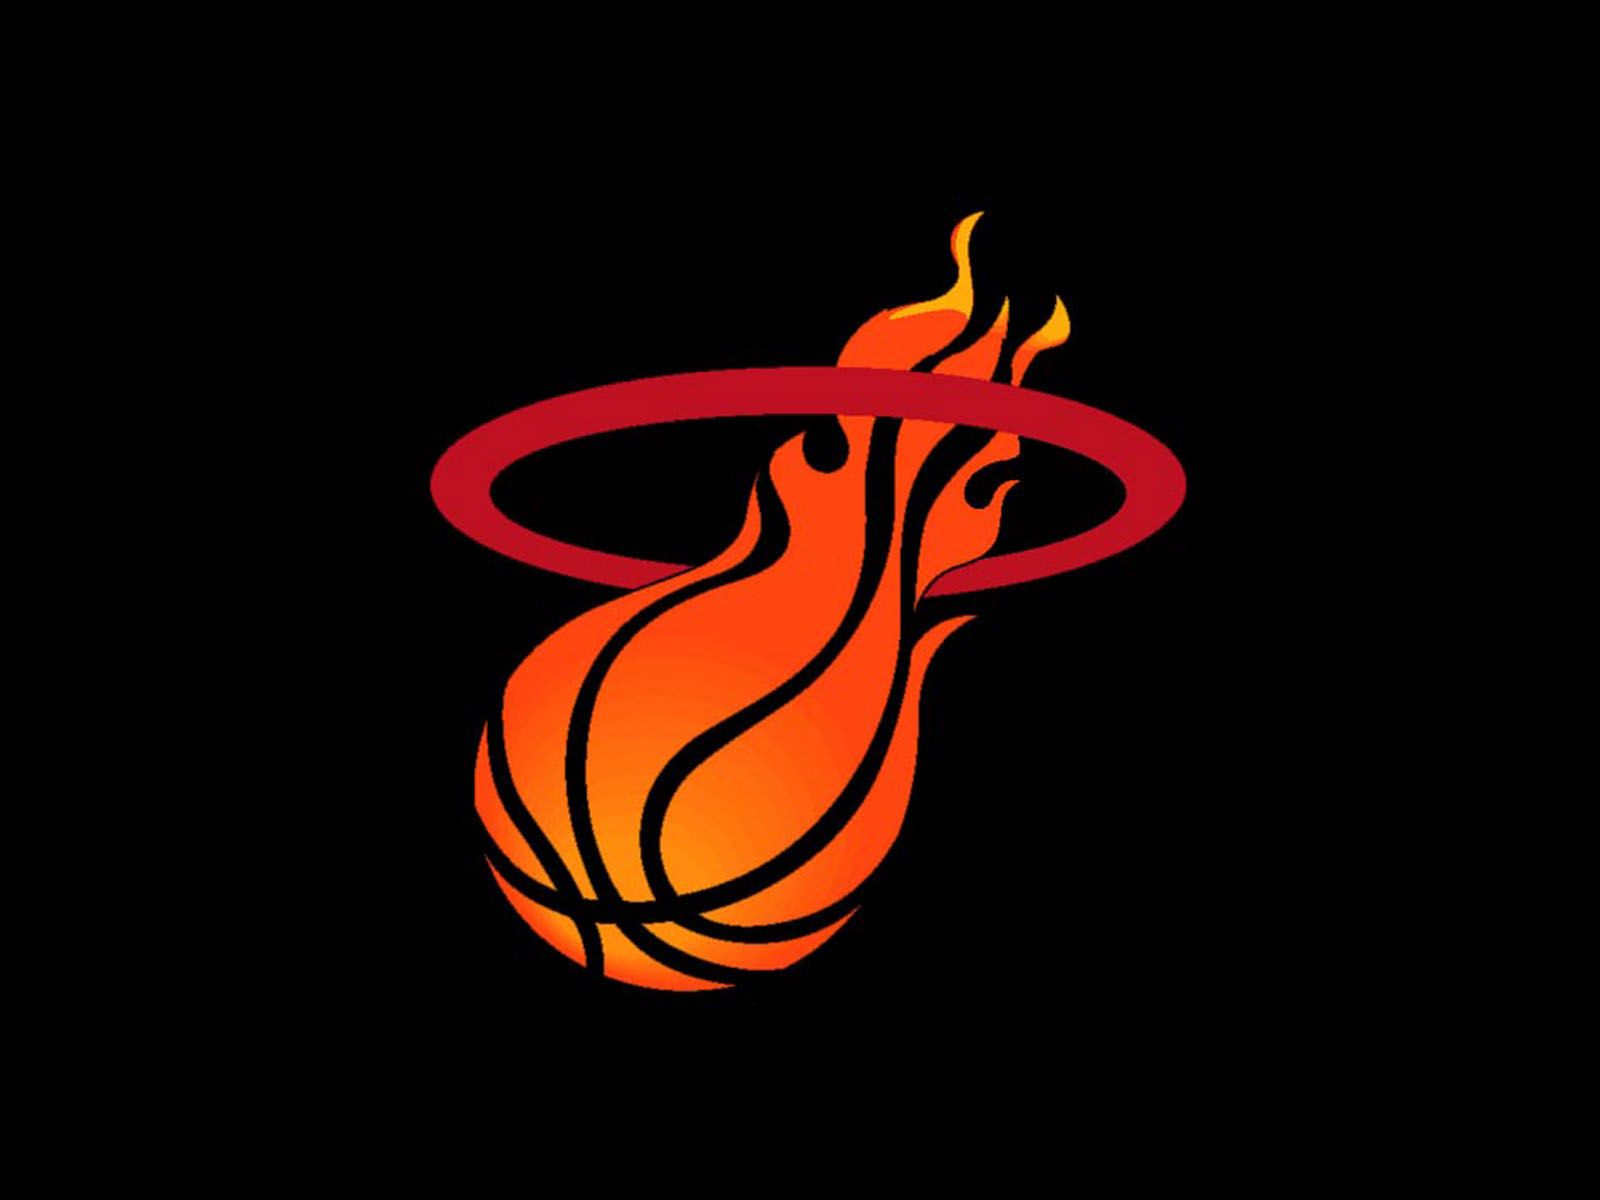 Miami Heat Basketball Club Logos HD Wallpaper Its